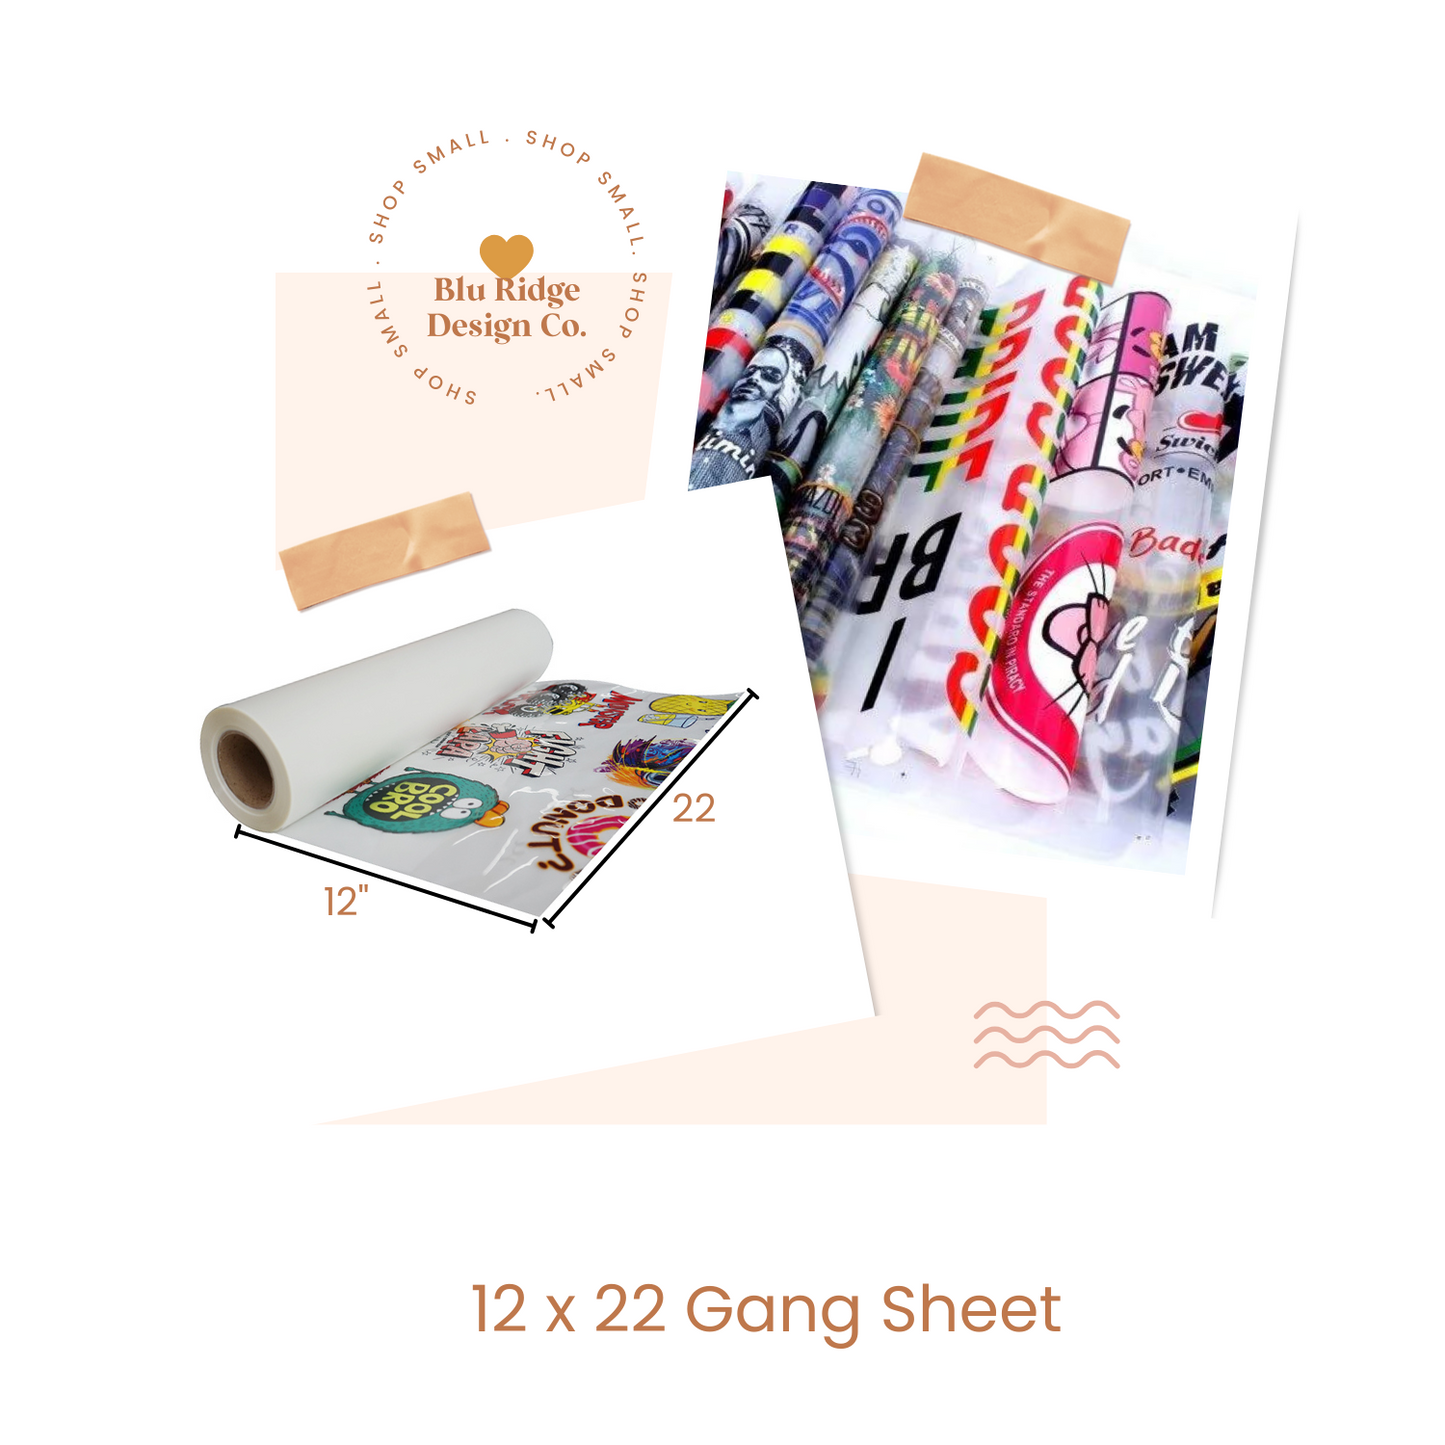 12 x 22 Pre-Made Gang Sheet